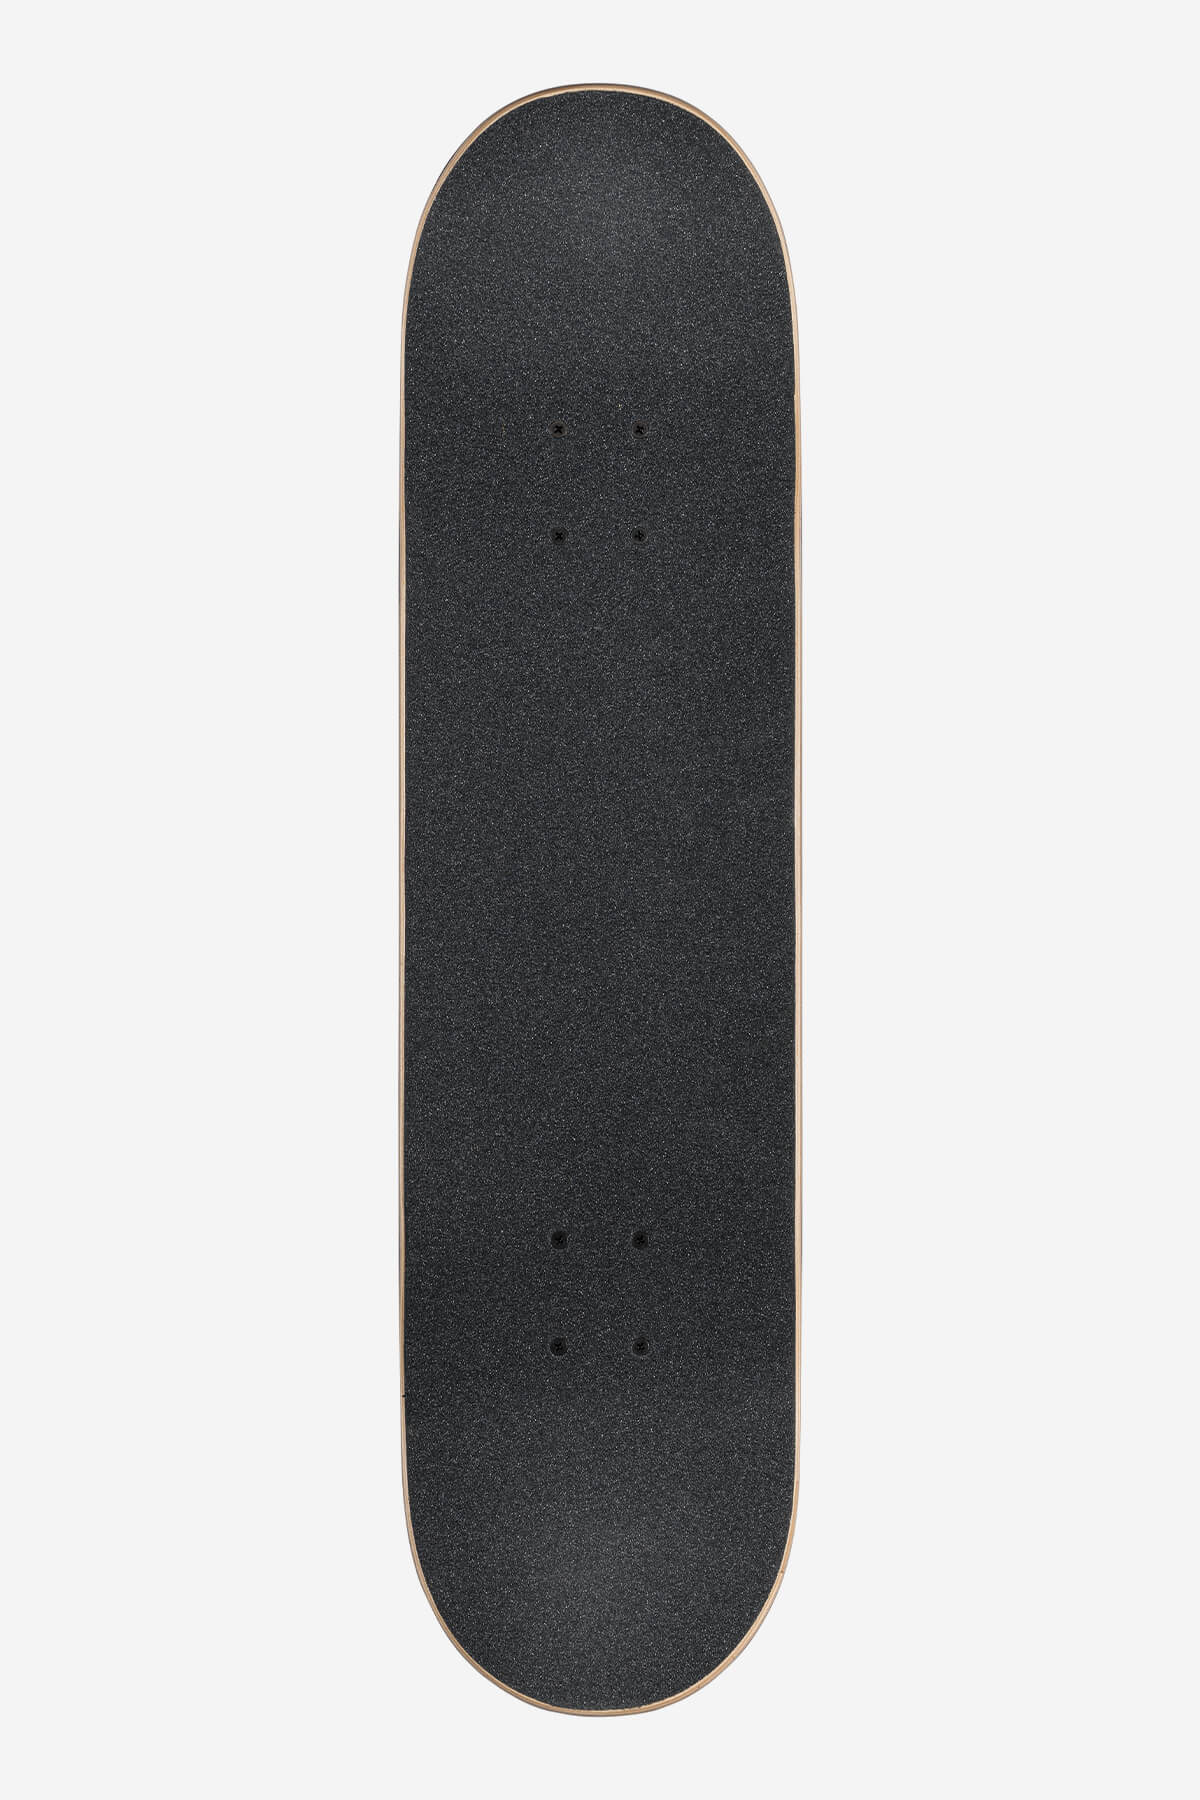 Globe - G1 Lineform - Olive - 8,0" Completo Skateboard